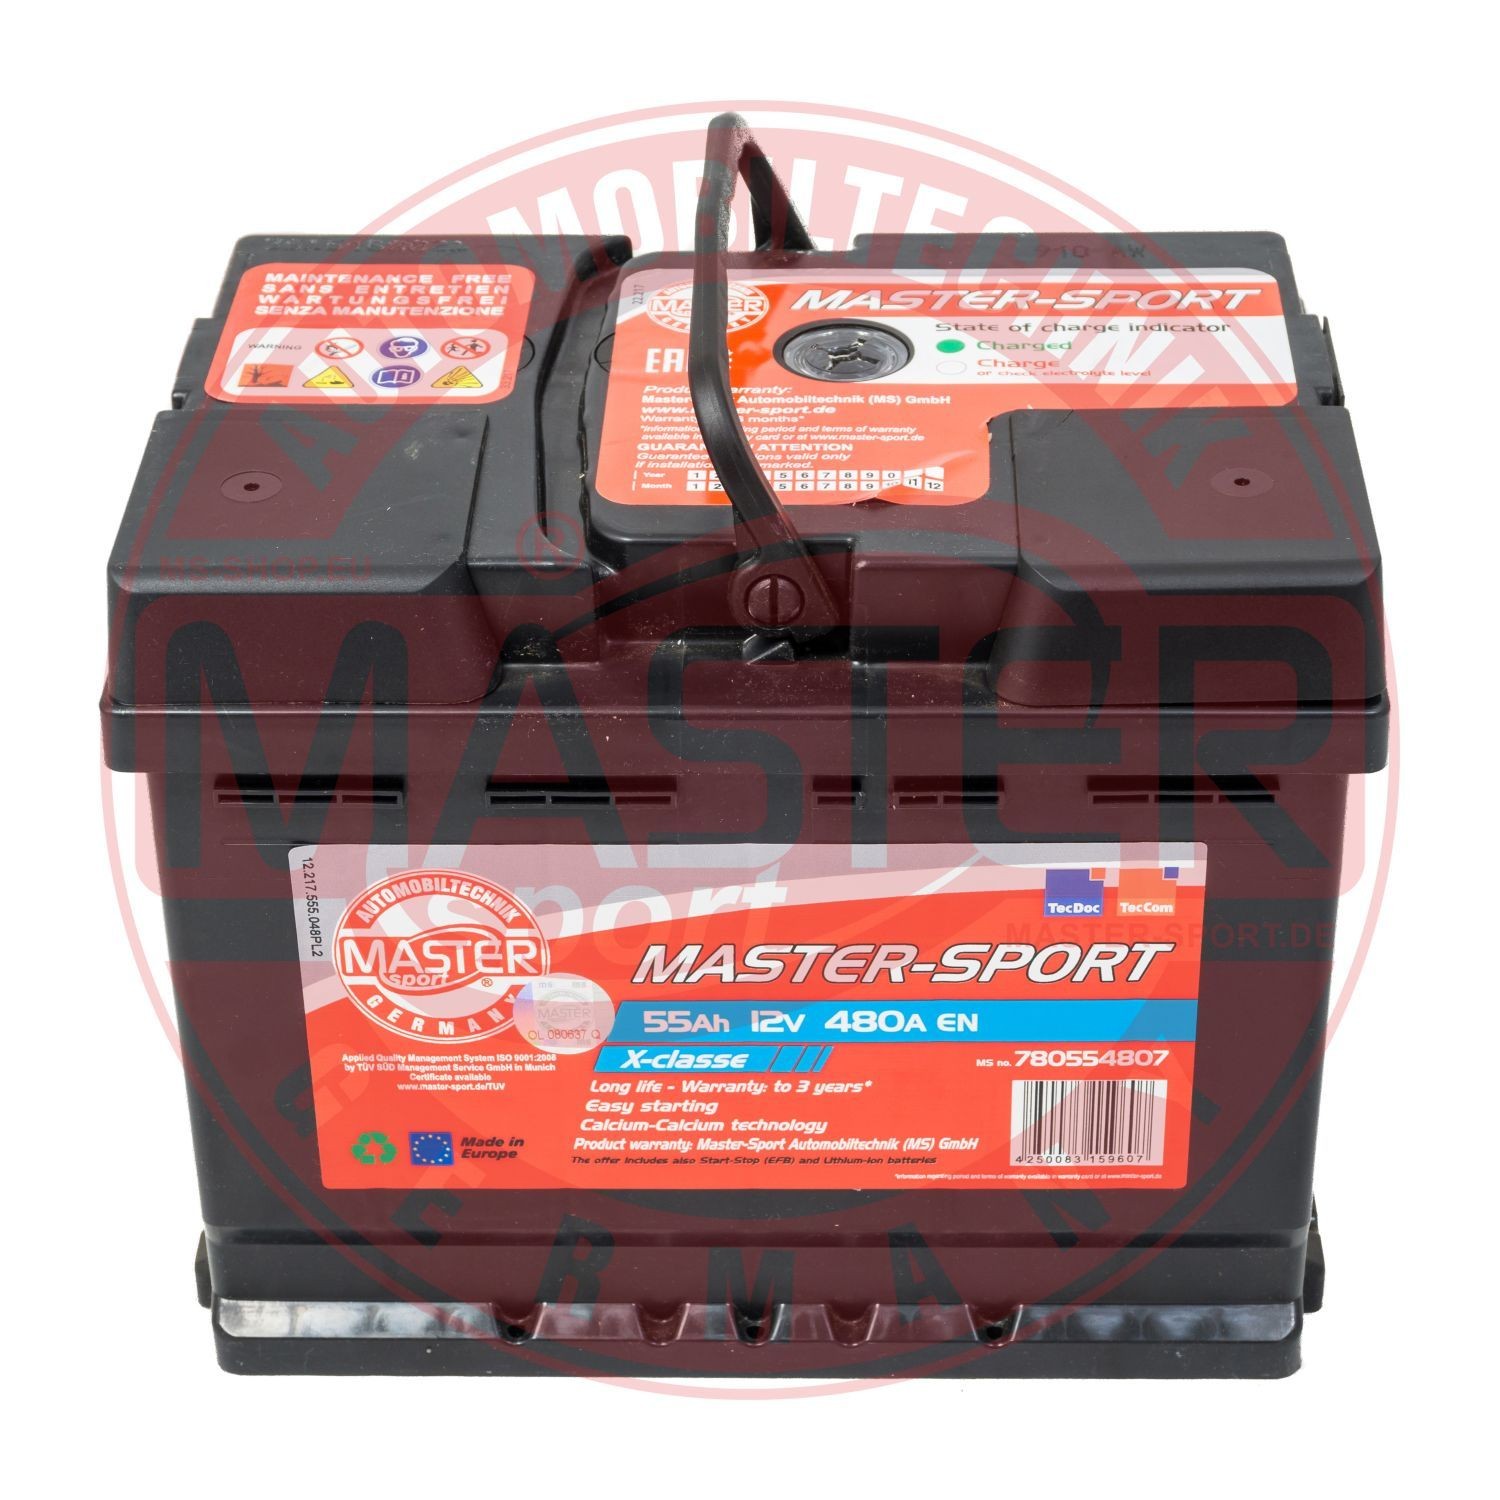 Great value for money - MASTER-SPORT Battery 750554802